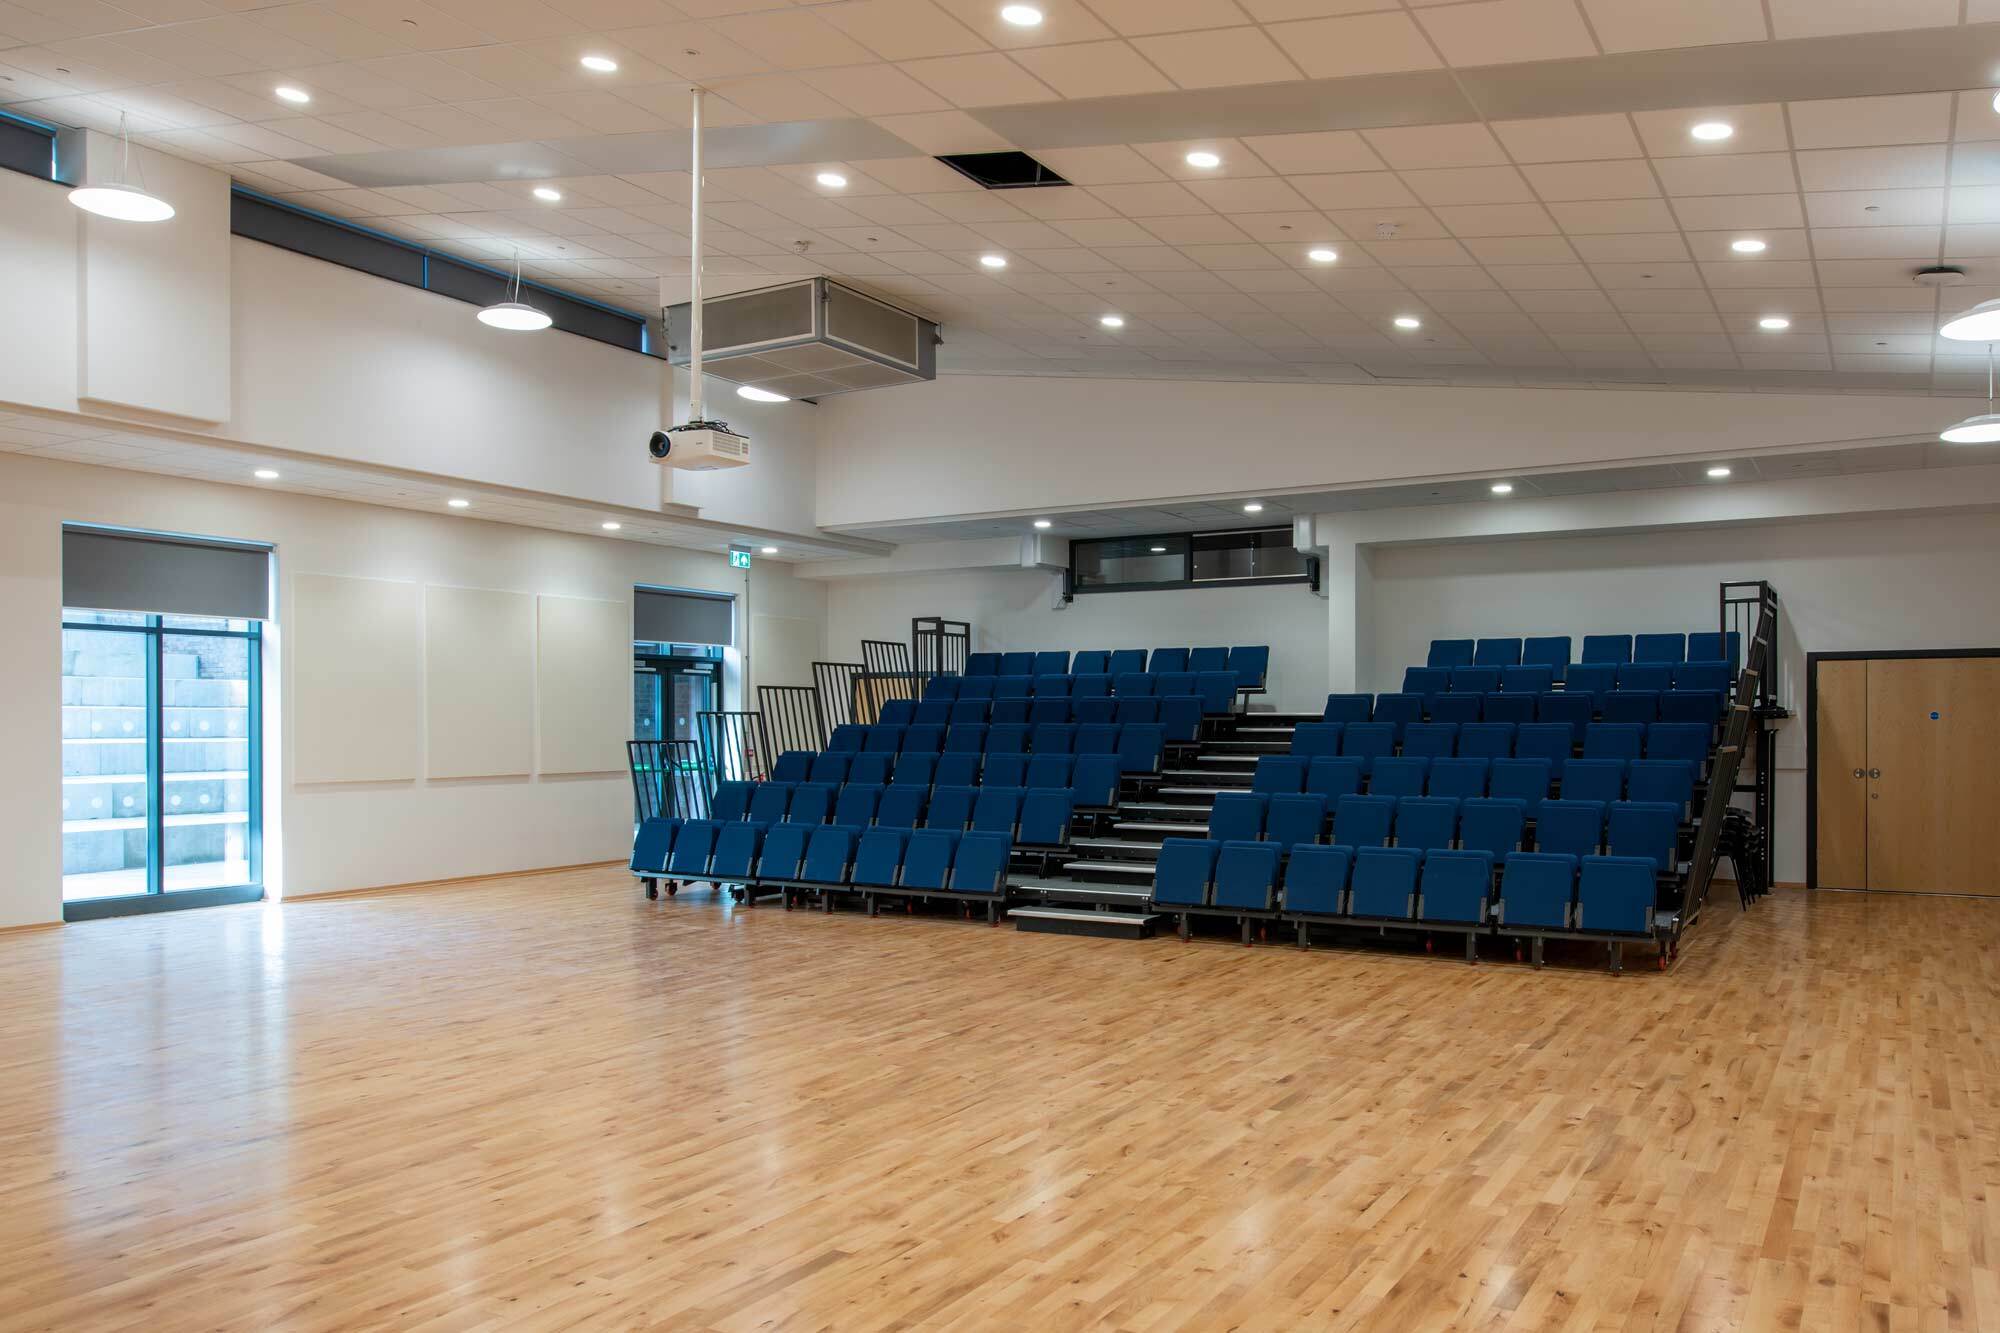 Inside the hall at Saddleworth High School